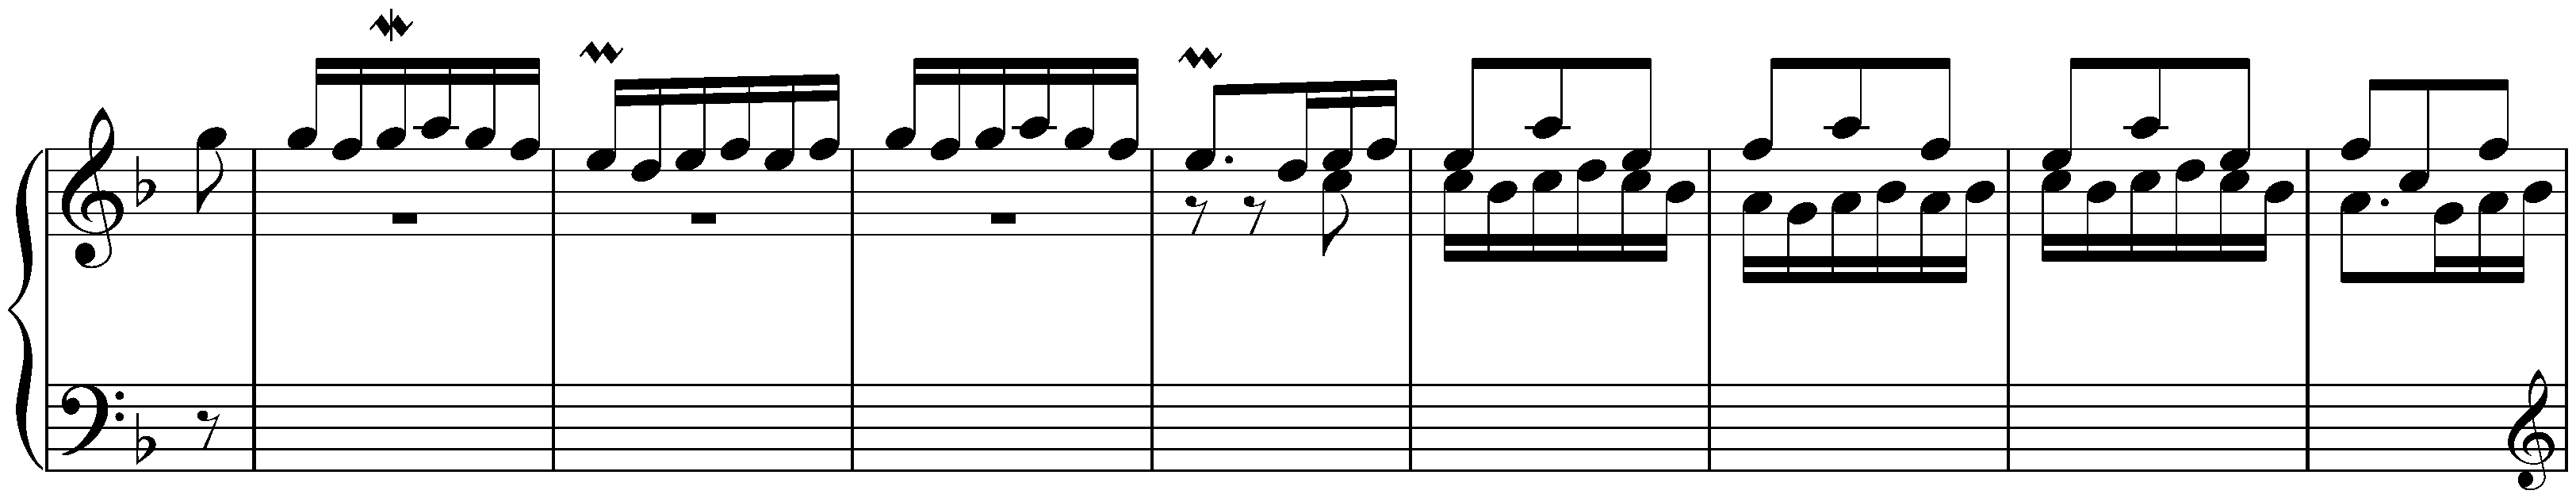 Overture (Suite) in F major, BWV 820; 1. Overture